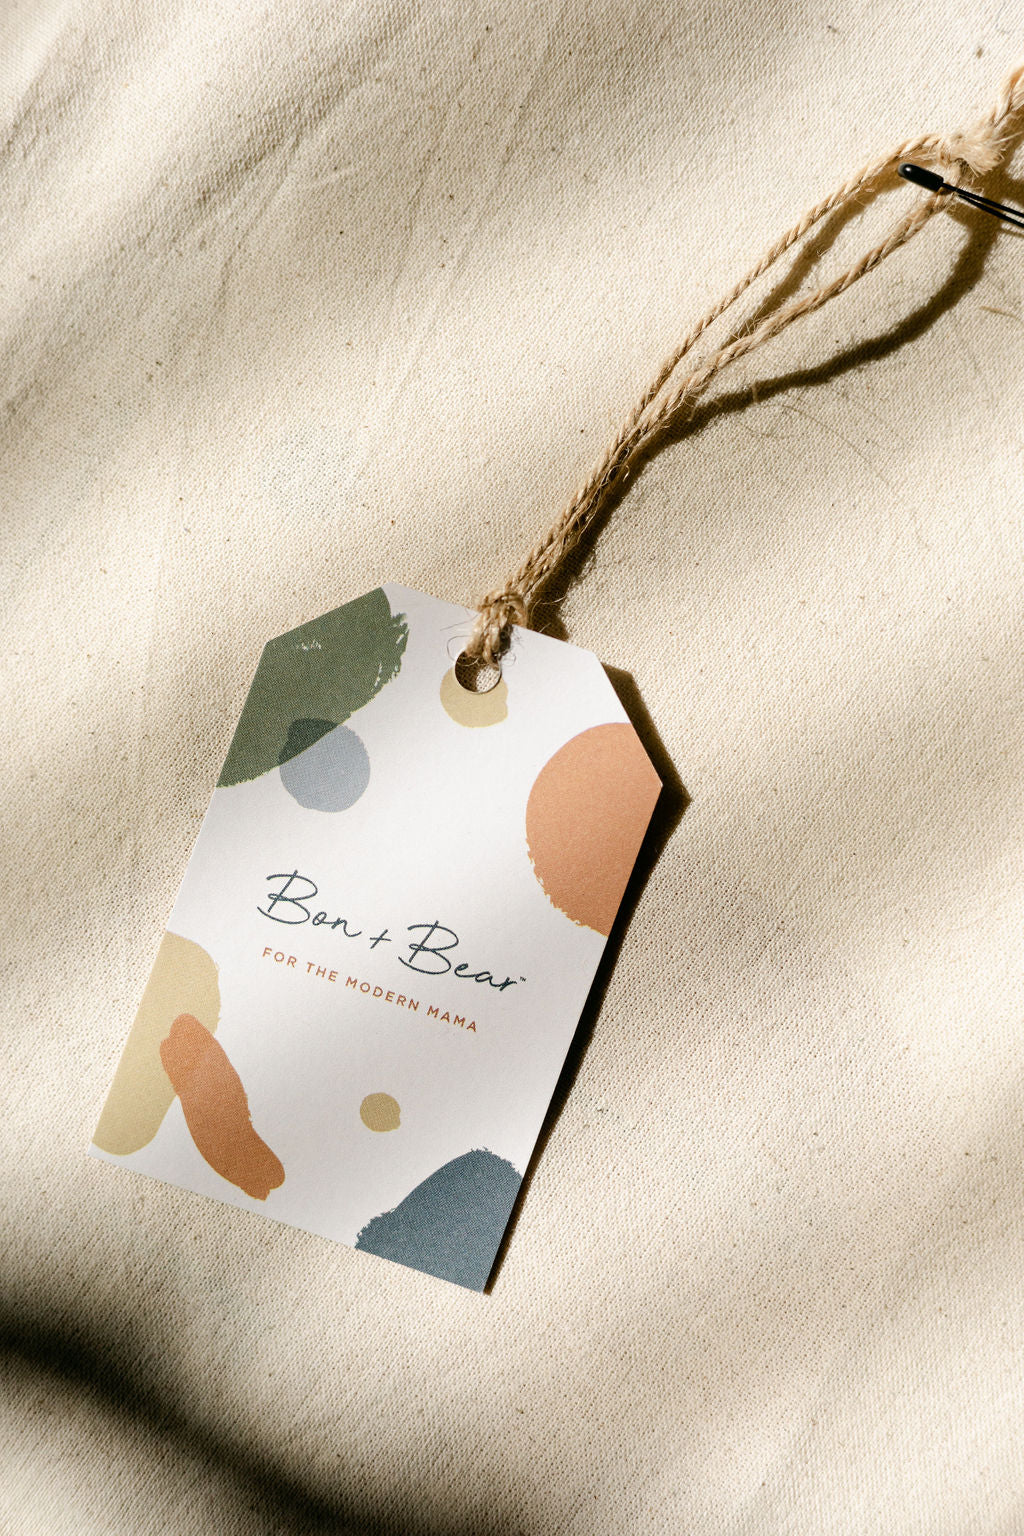 bon-and-bear-gift-tag-laid-on-fabric